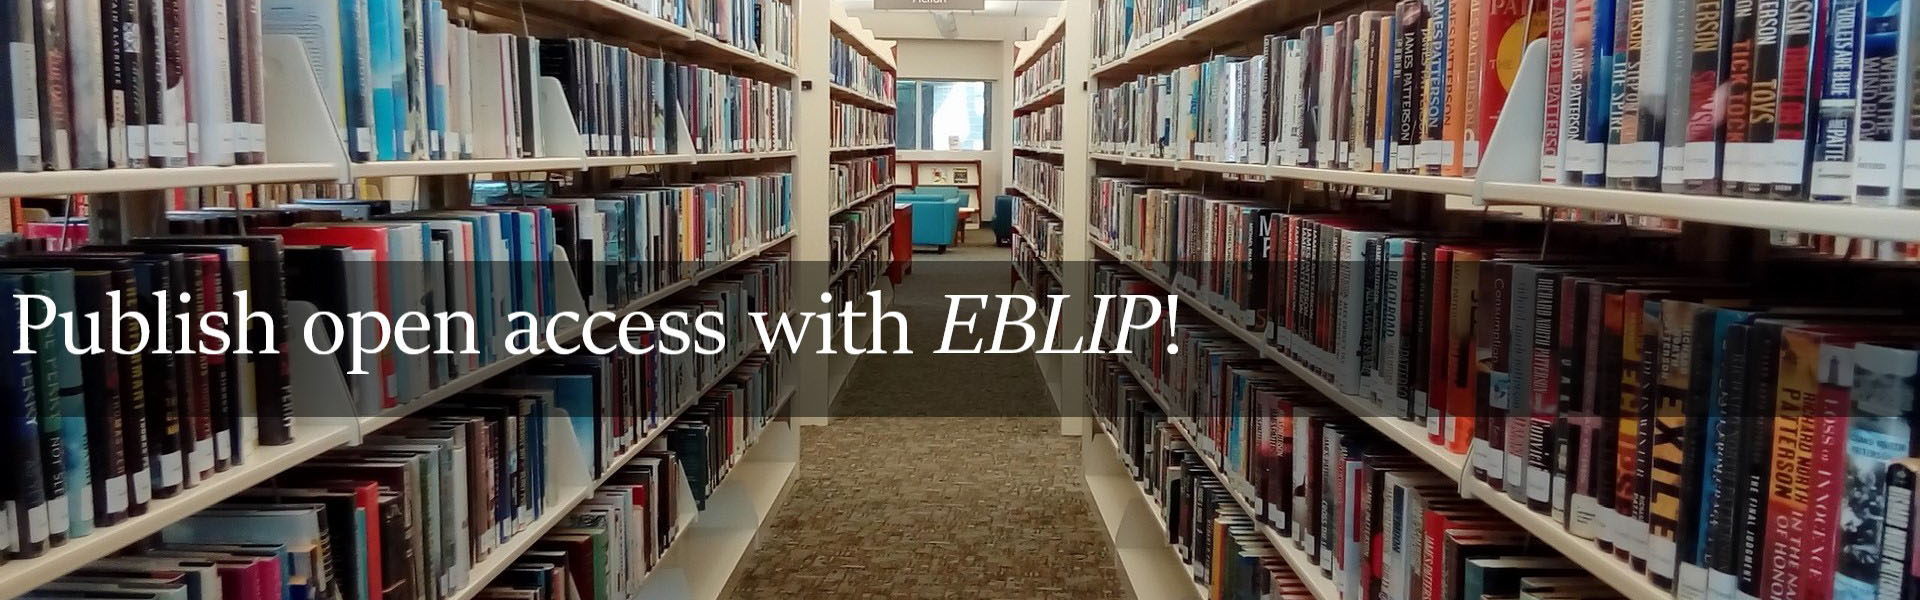 Bookshelves with caption: Publish open access with EBLIP!